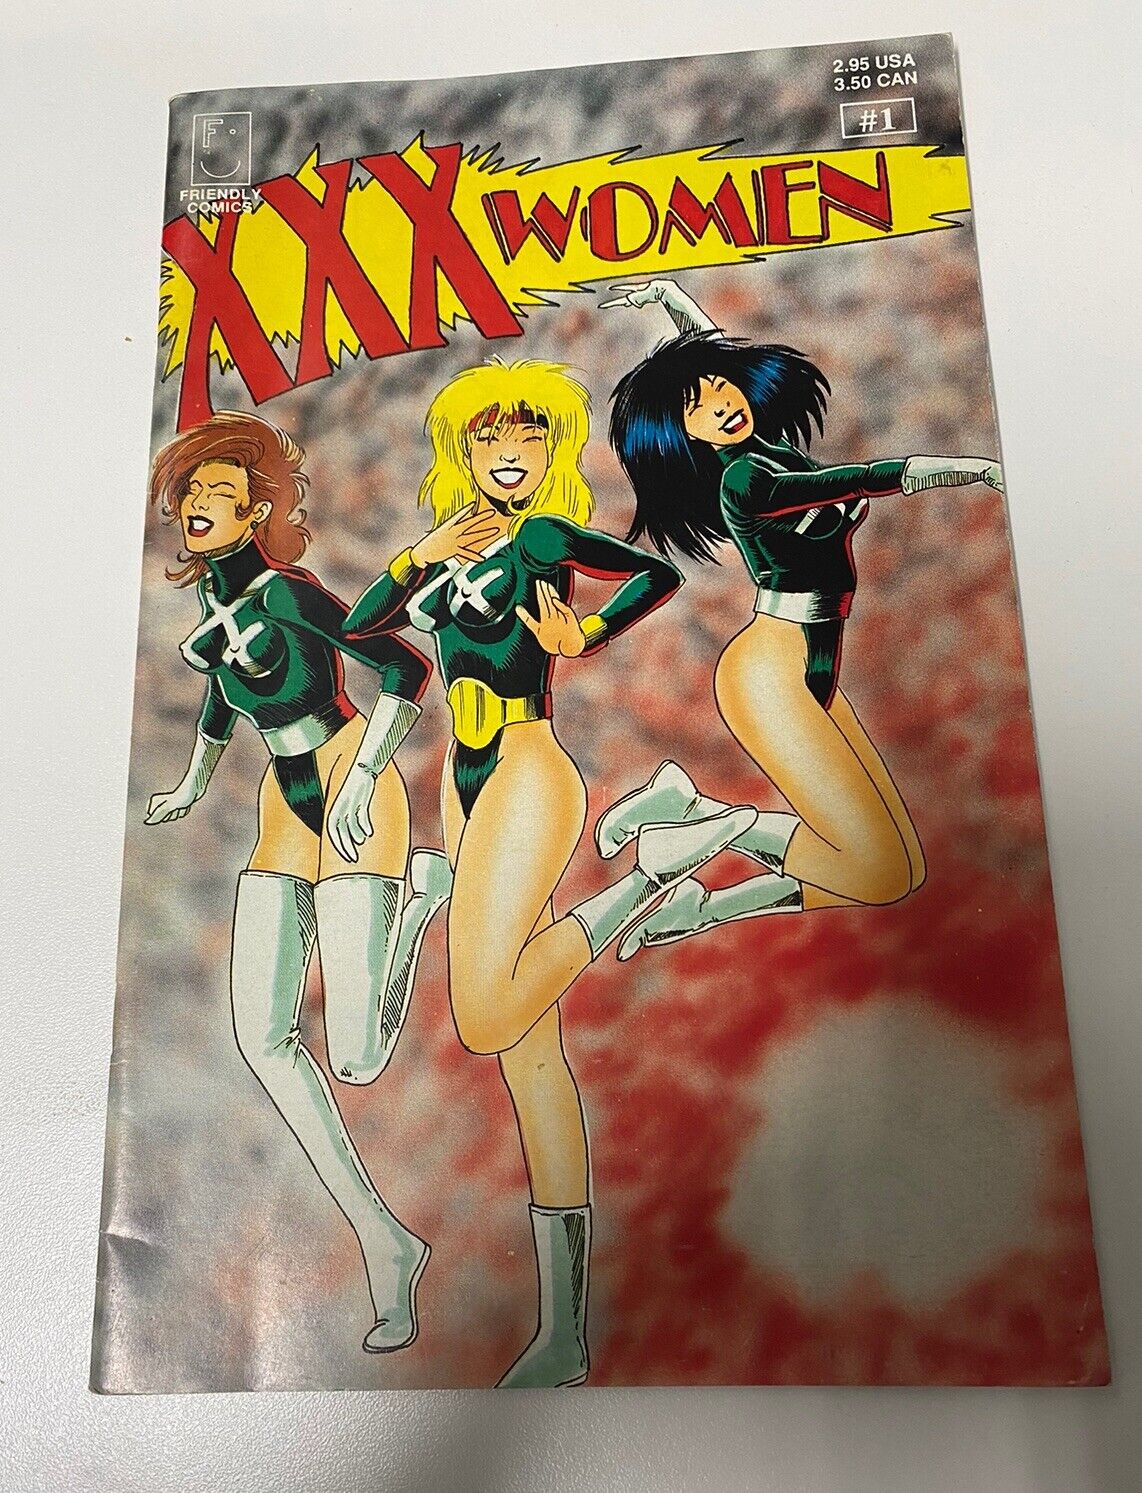 Triple XXX Women #1 Friendly Comics 1992